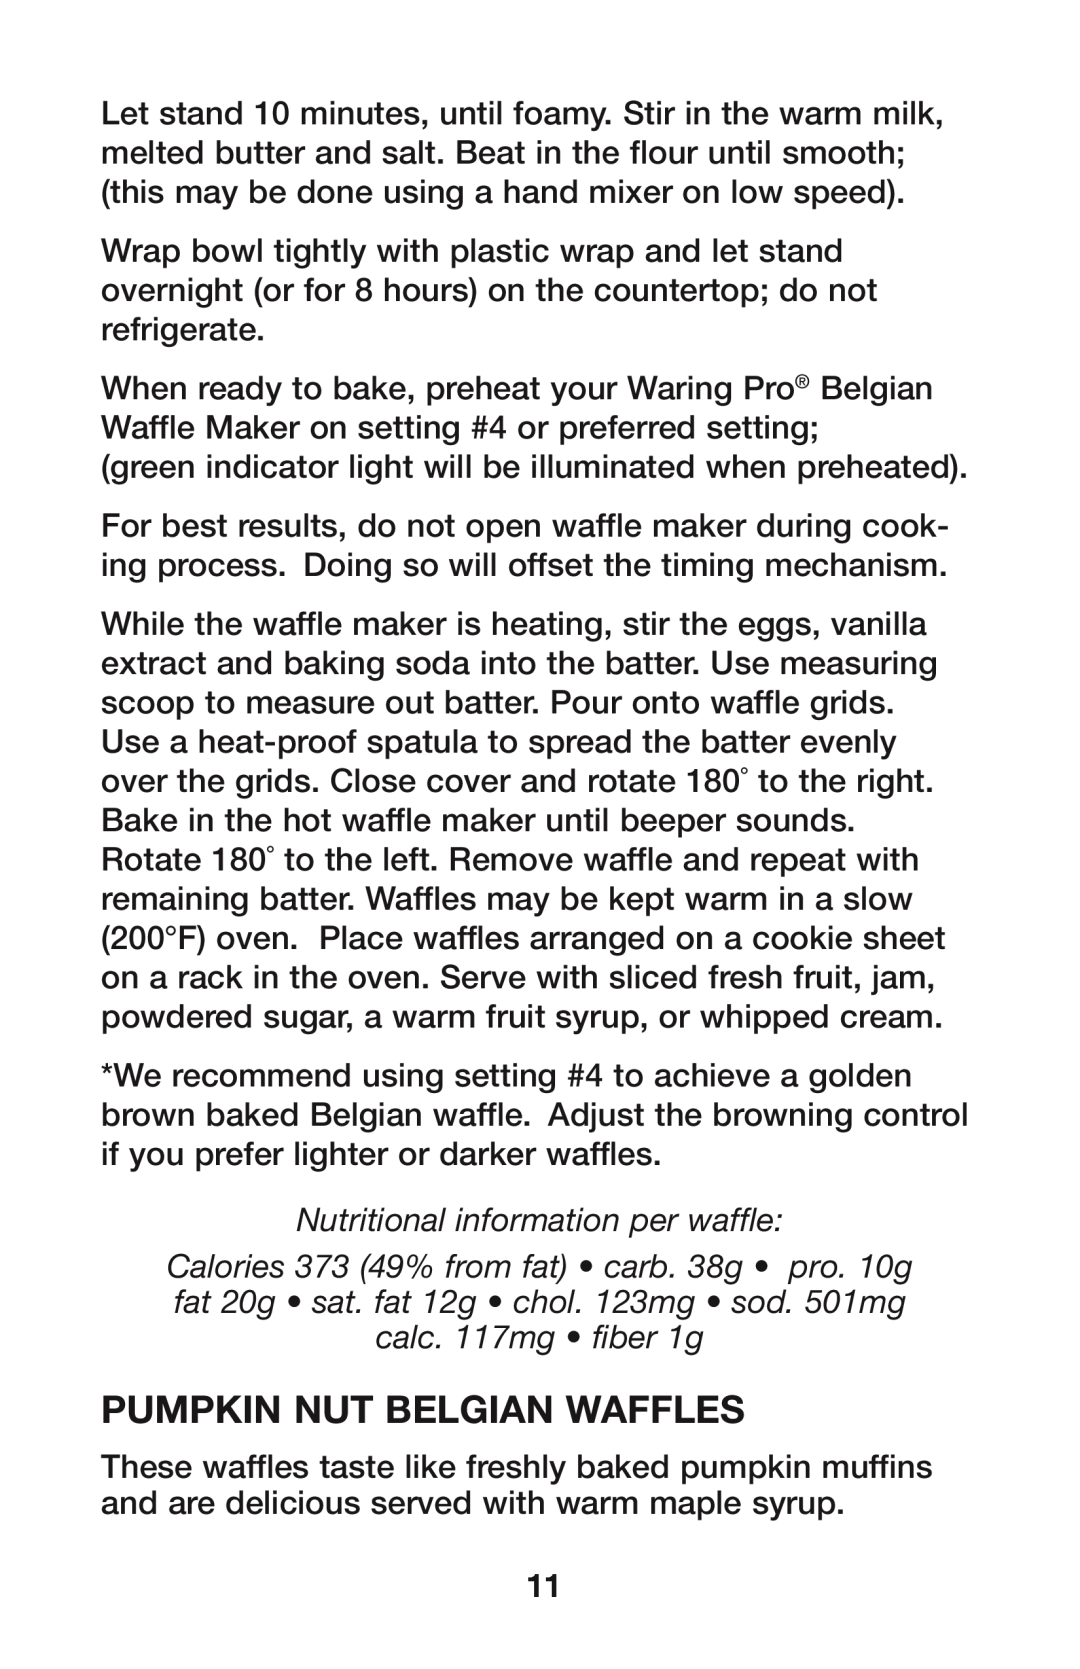 Waring IB8465, WMK300A, IB08WR119 manual Pumpkin Nut Belgian Waffles, Nutritional information per waffle 